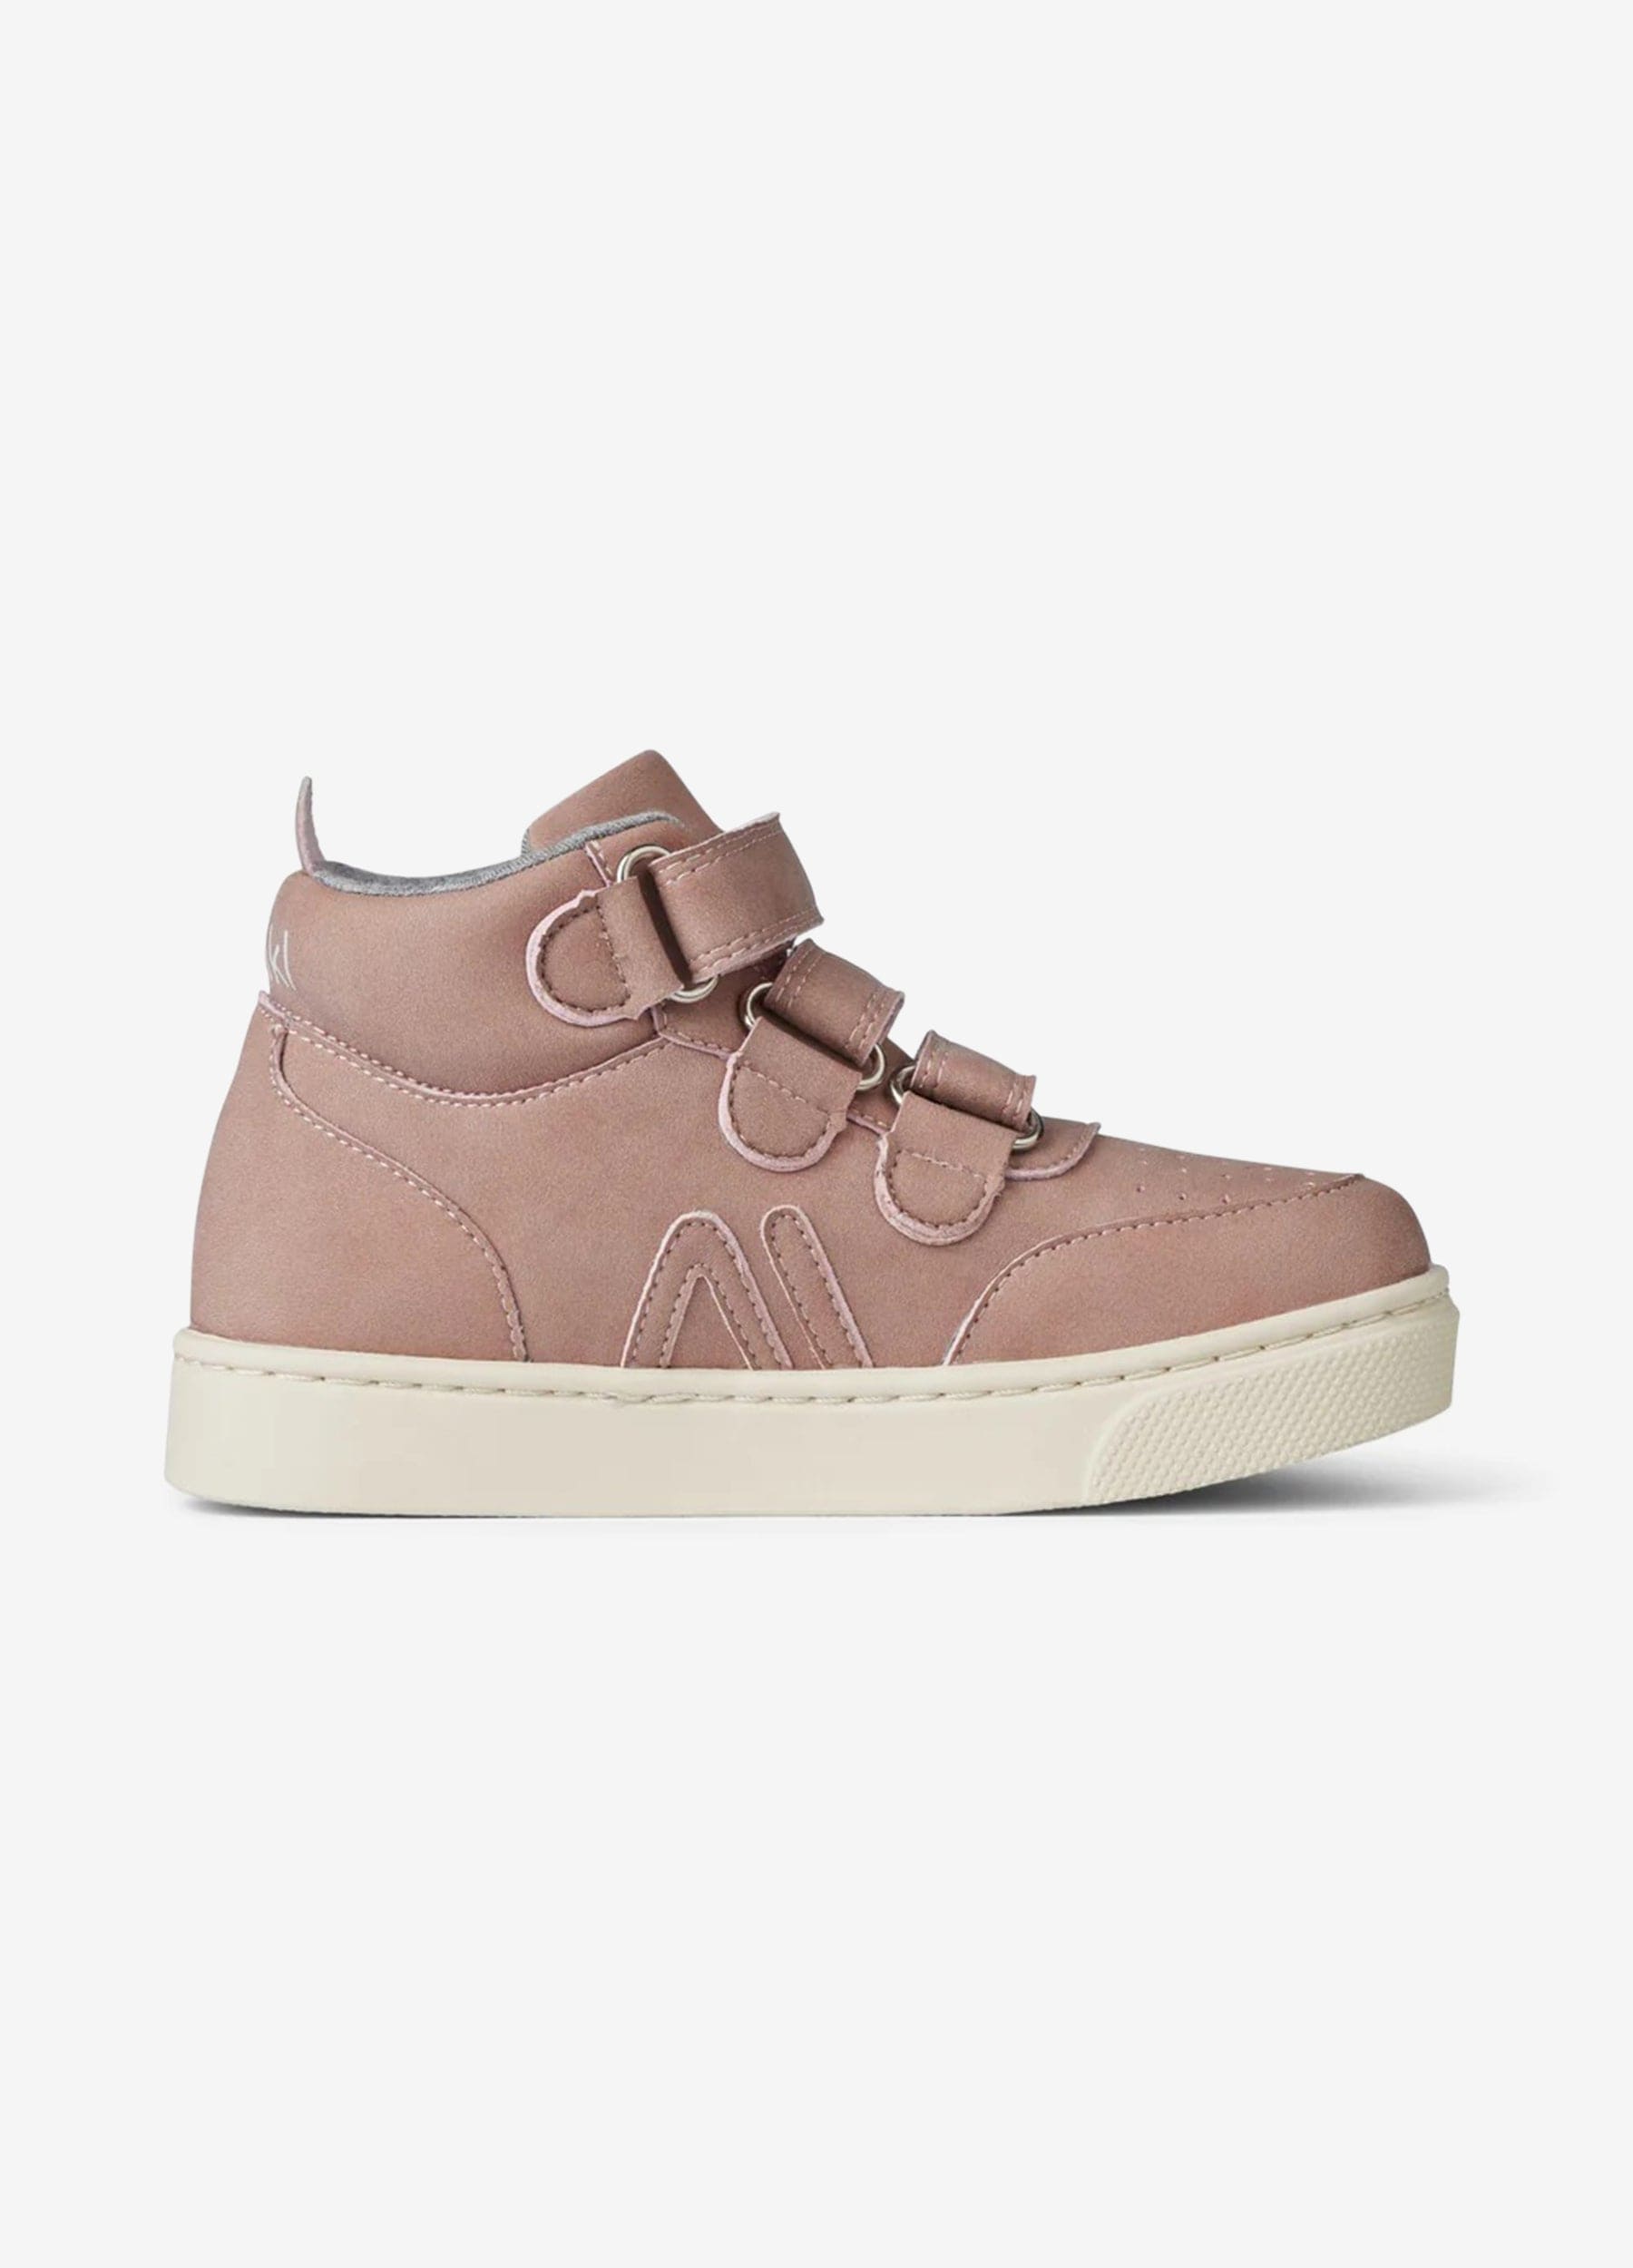 ASK - Foot -shaped Mid -Hi Sneaker